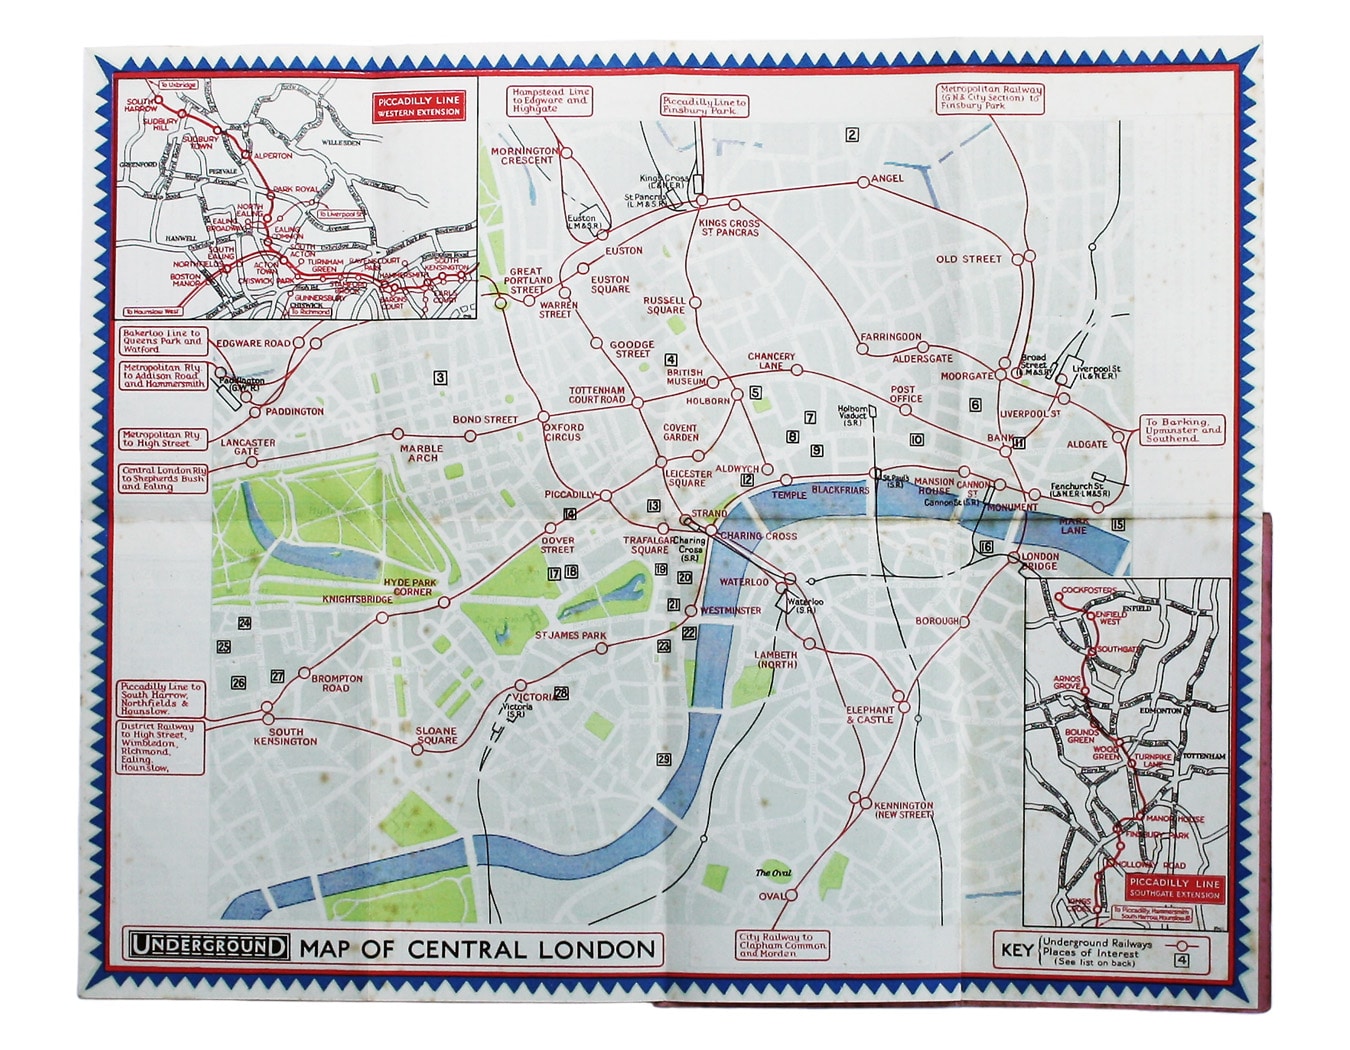 Stingemore’s 1932 Passenger Map of Central London